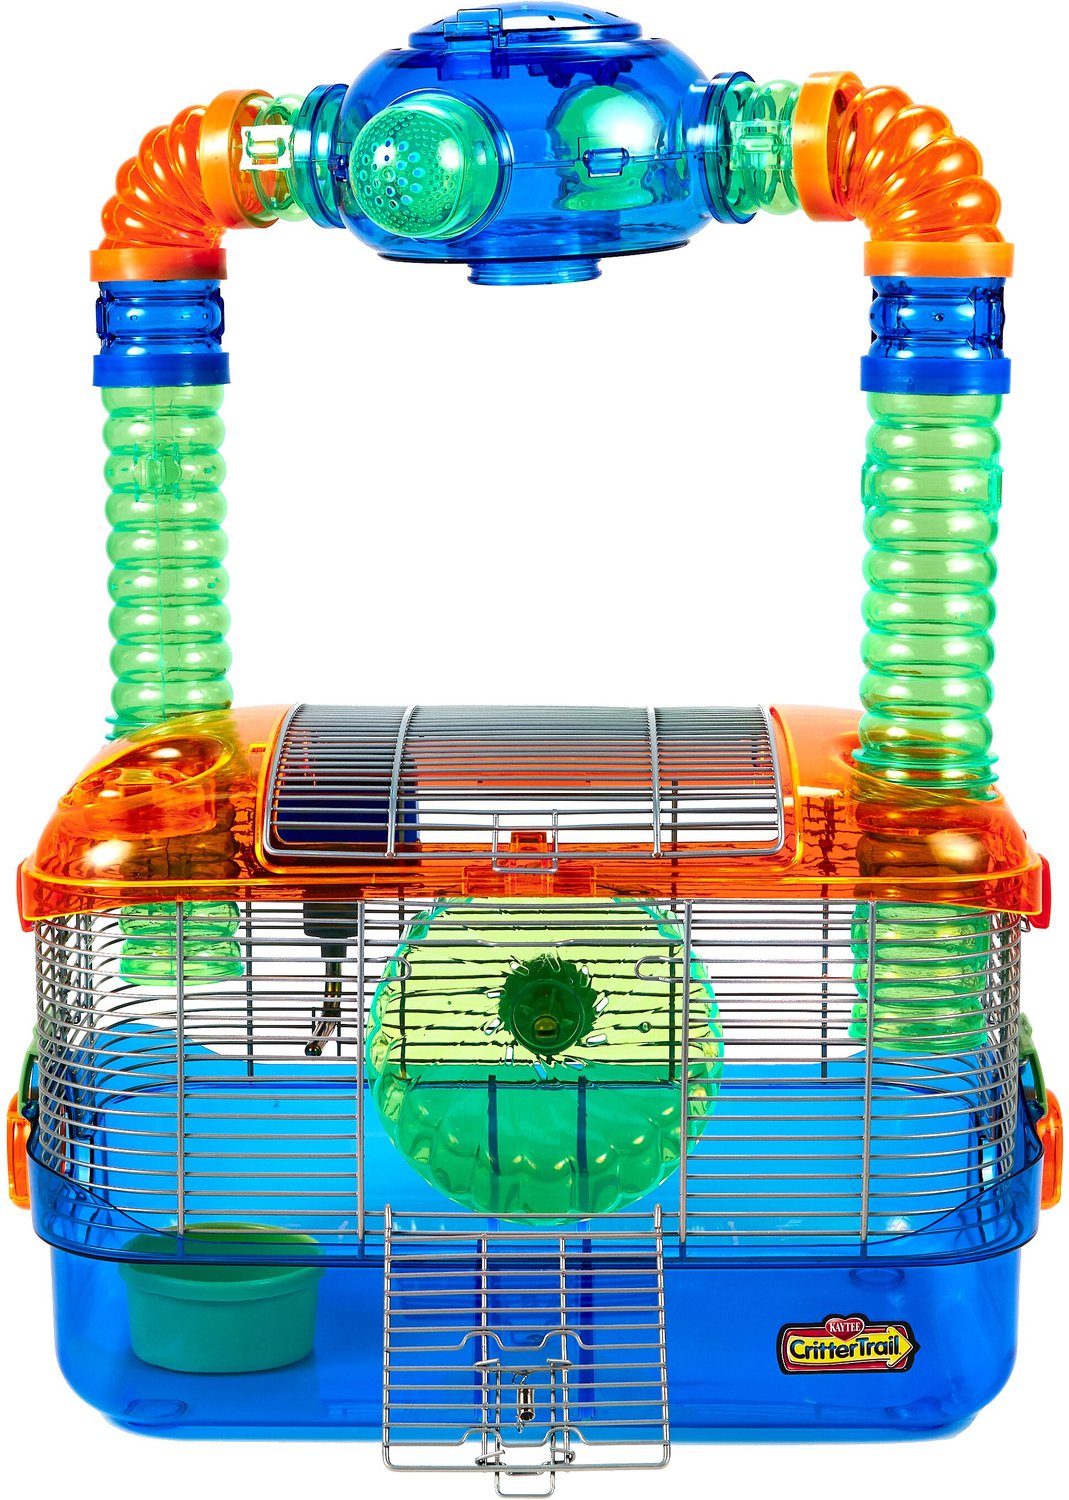 kaytee hamster cage